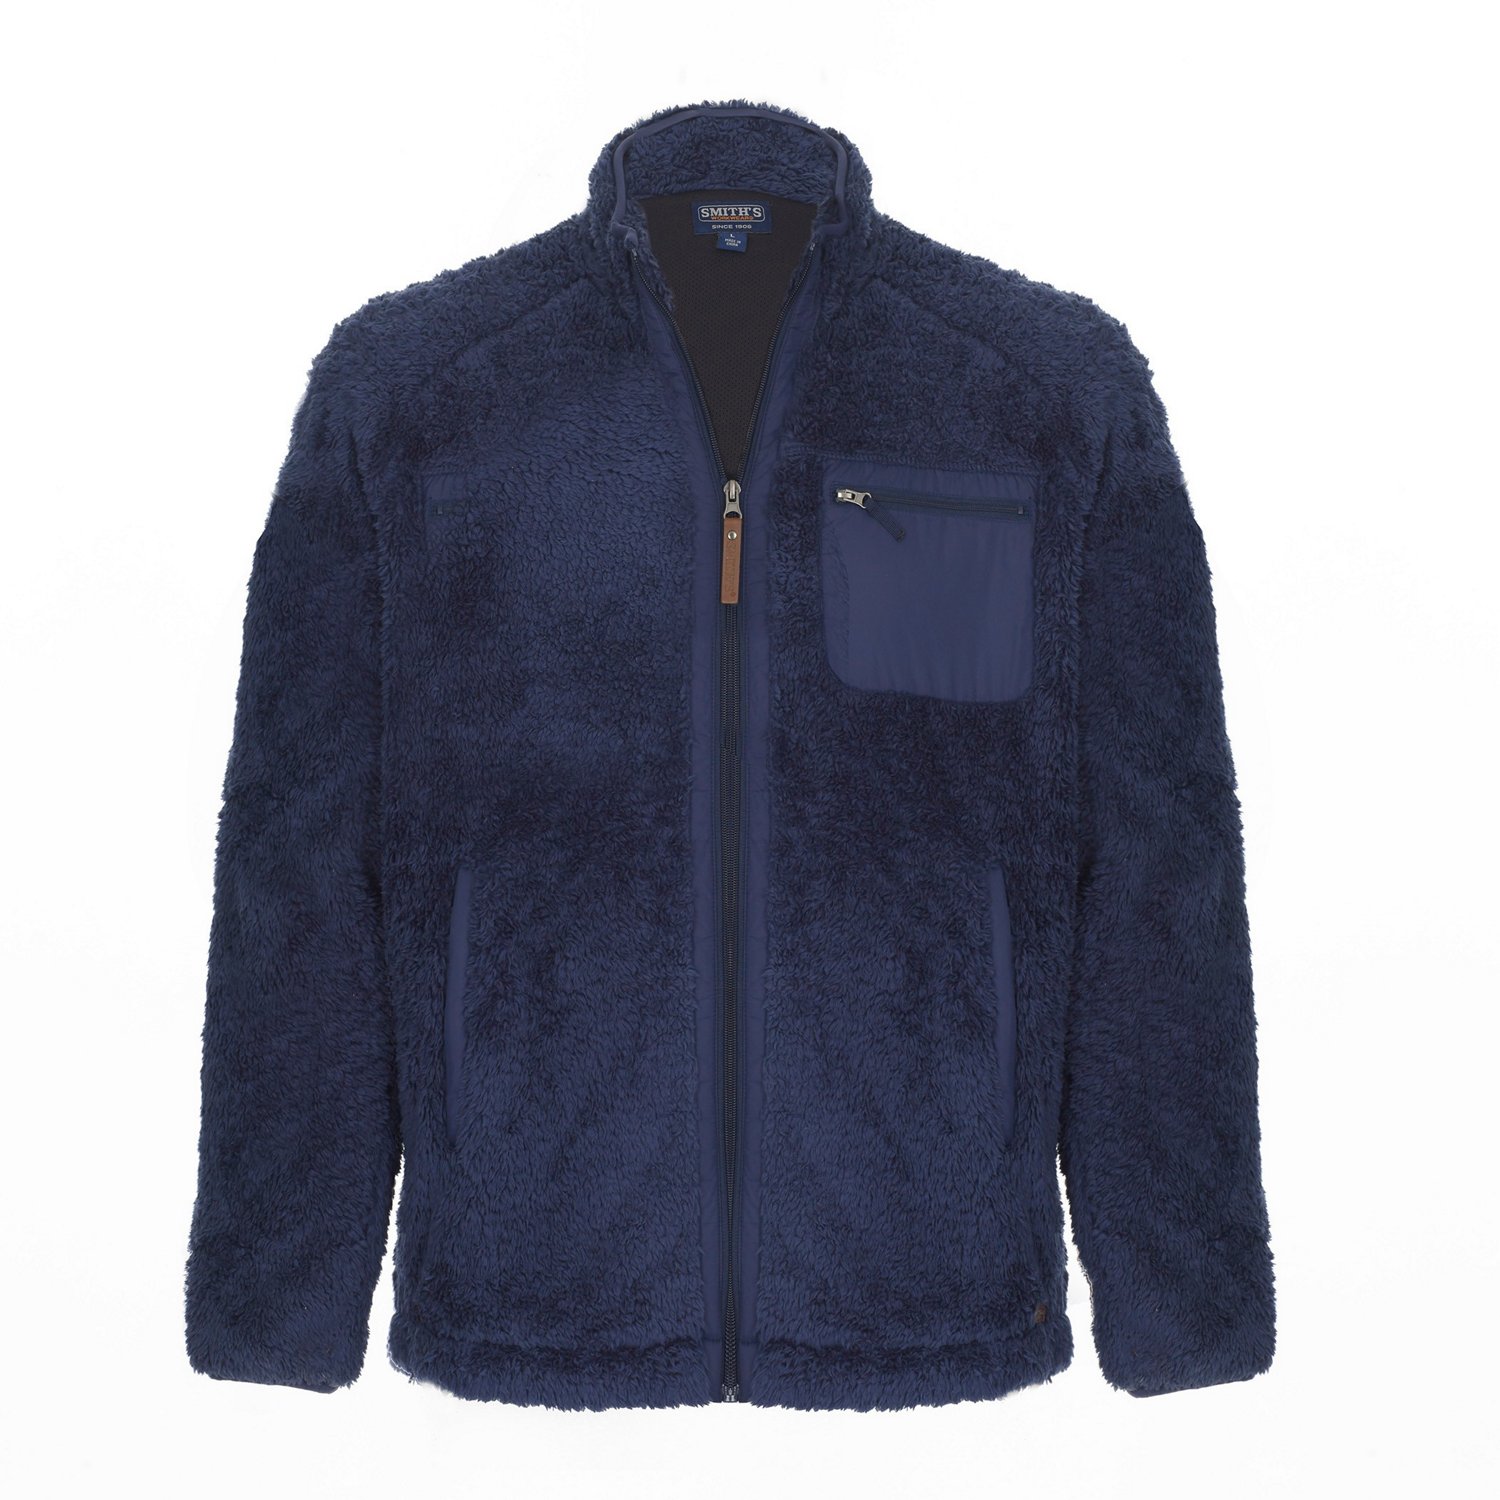 Smith's Workwear Men's Butter Sherpa Full-Zip Jacket | Academy